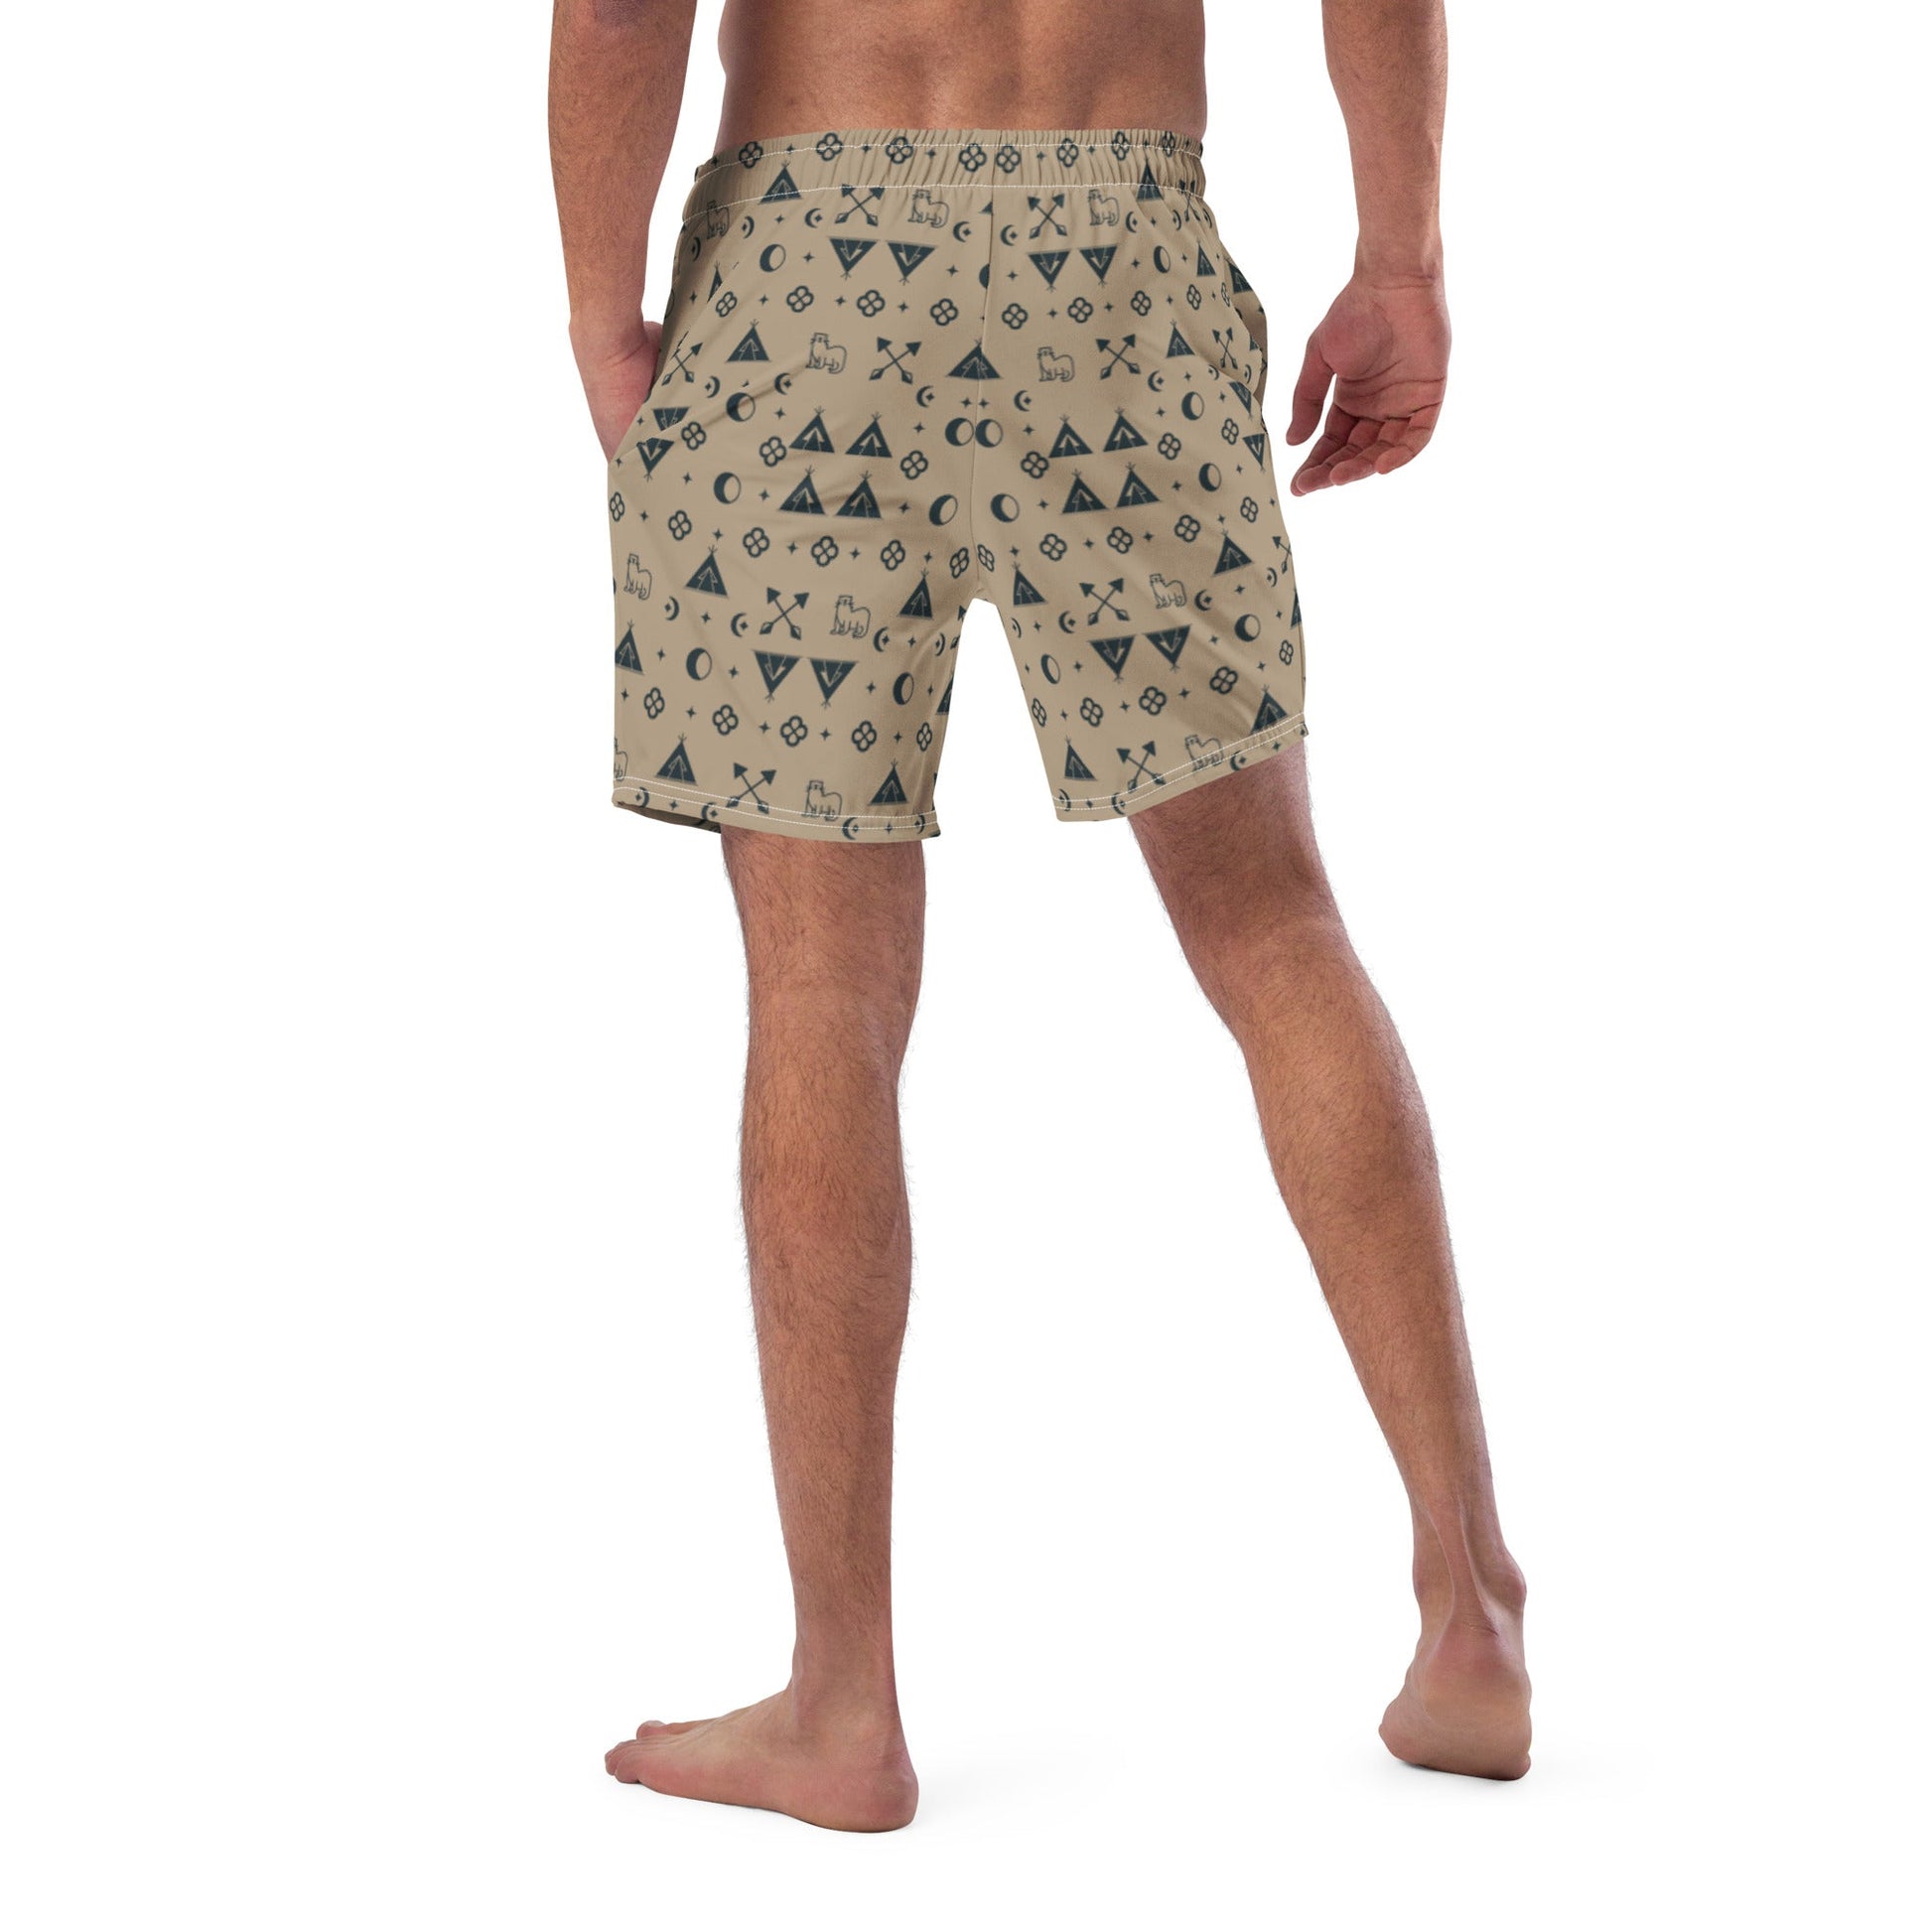 Men's swim trunks Boujee Native Recycled Material - Nikikw Designs